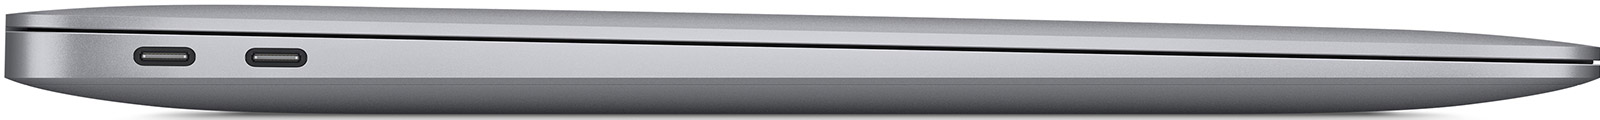 Apple-MacBook-Air-13-3-M1-8-Core-16-GB-1-TB-8-Core-Grafik-Space-Grau-DE-Deuts-05.jpg